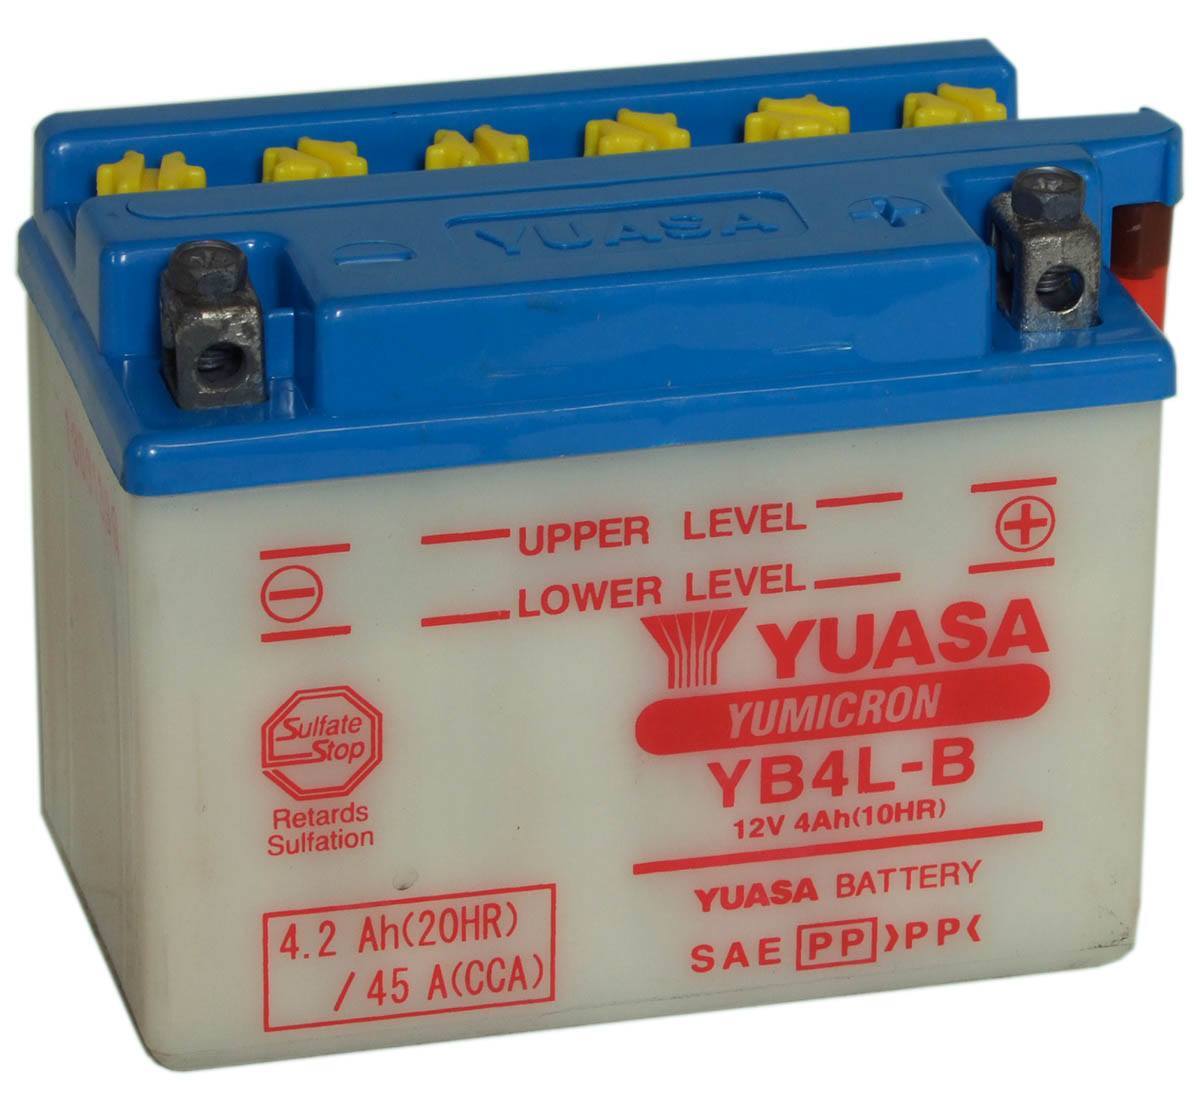 Yuasa Yumicron YB4L-B 12V Motorcycle Battery